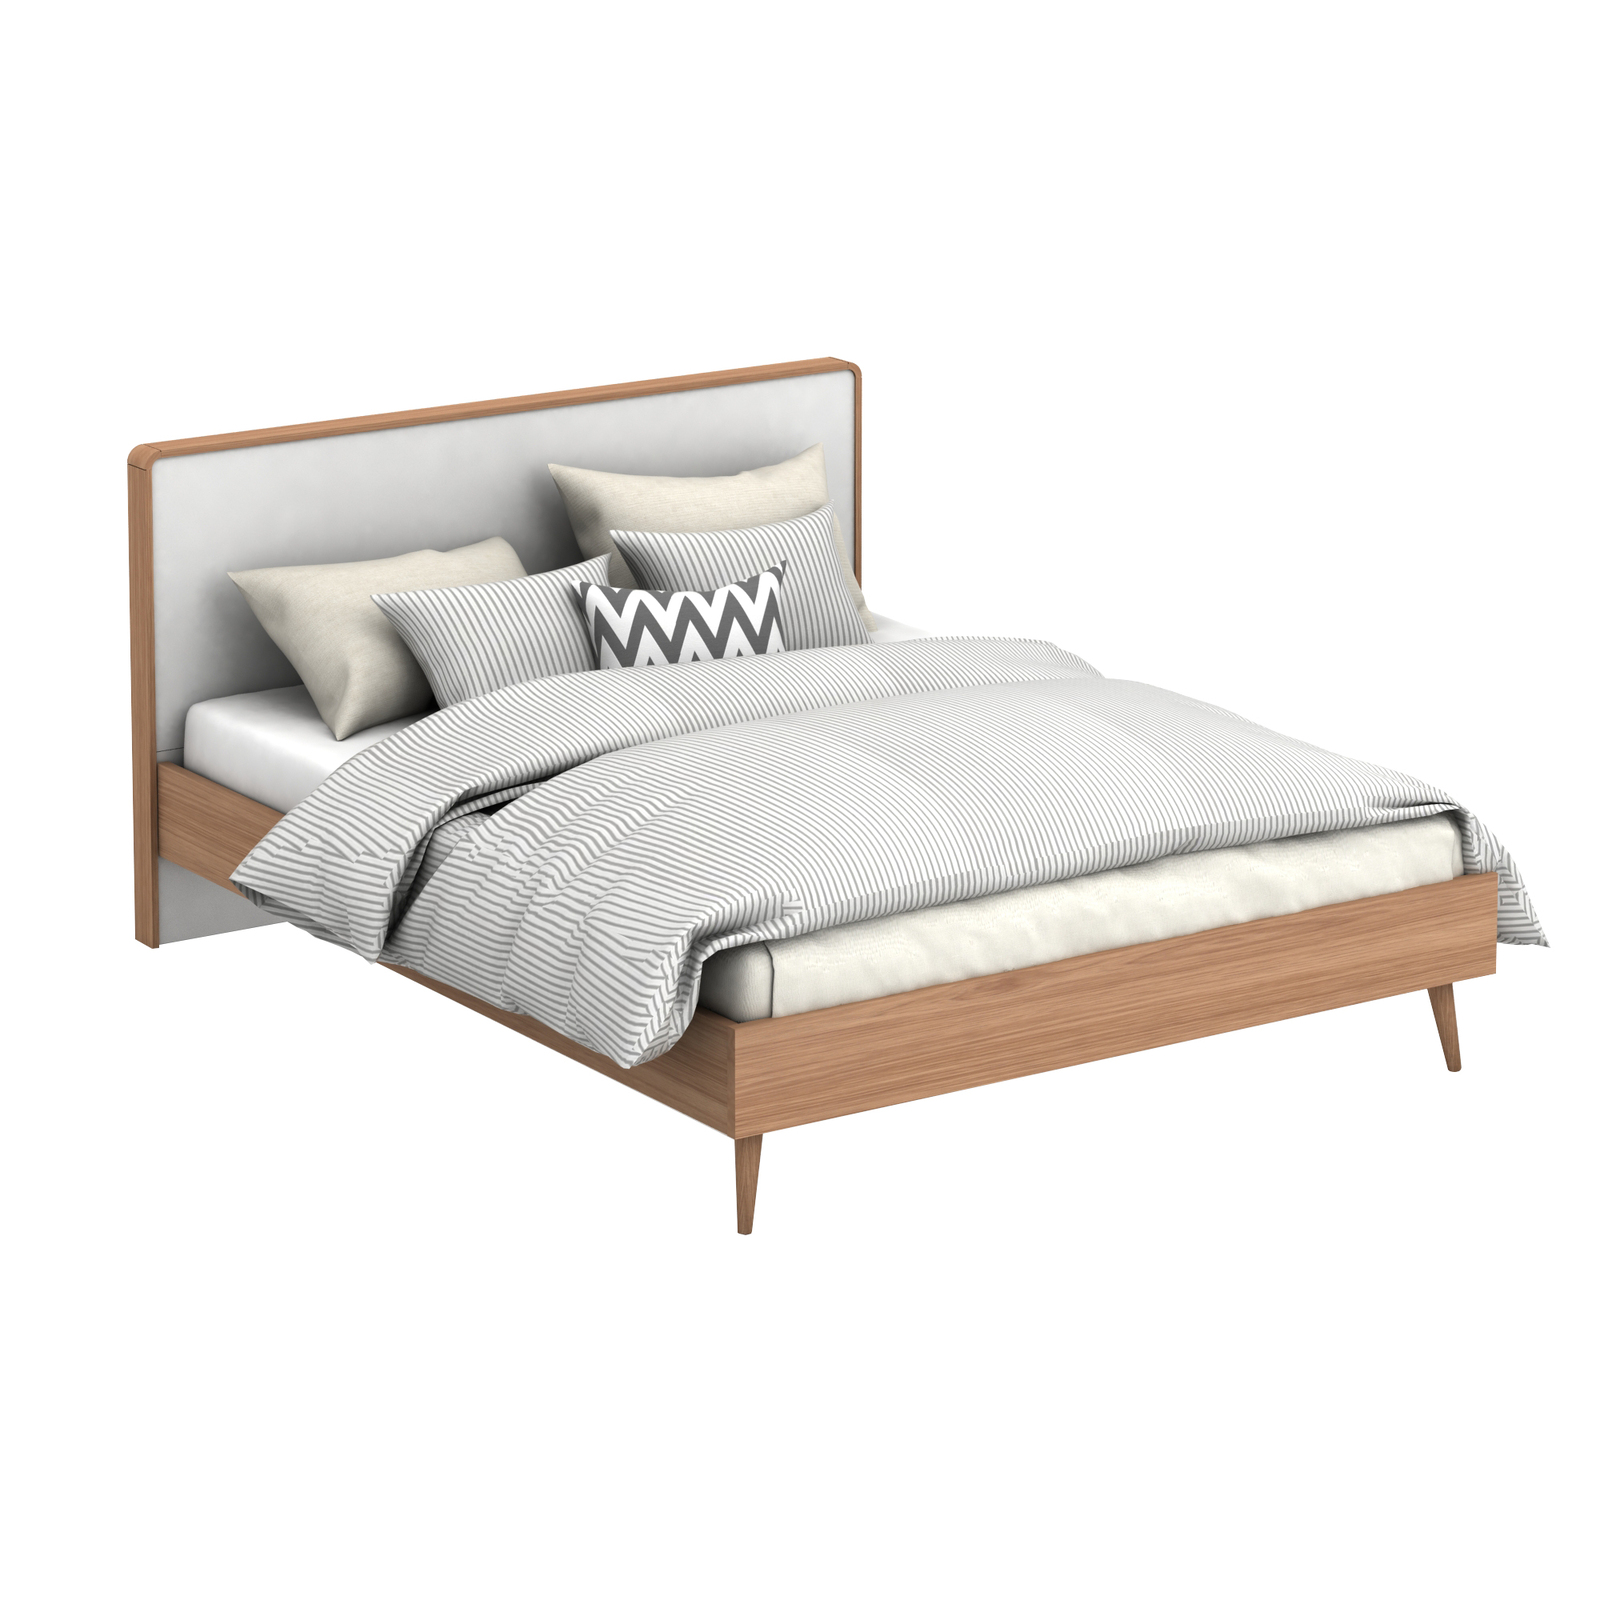 Cosmoliving Bed Frame Scandinavian, Oak Headboard Queen Size